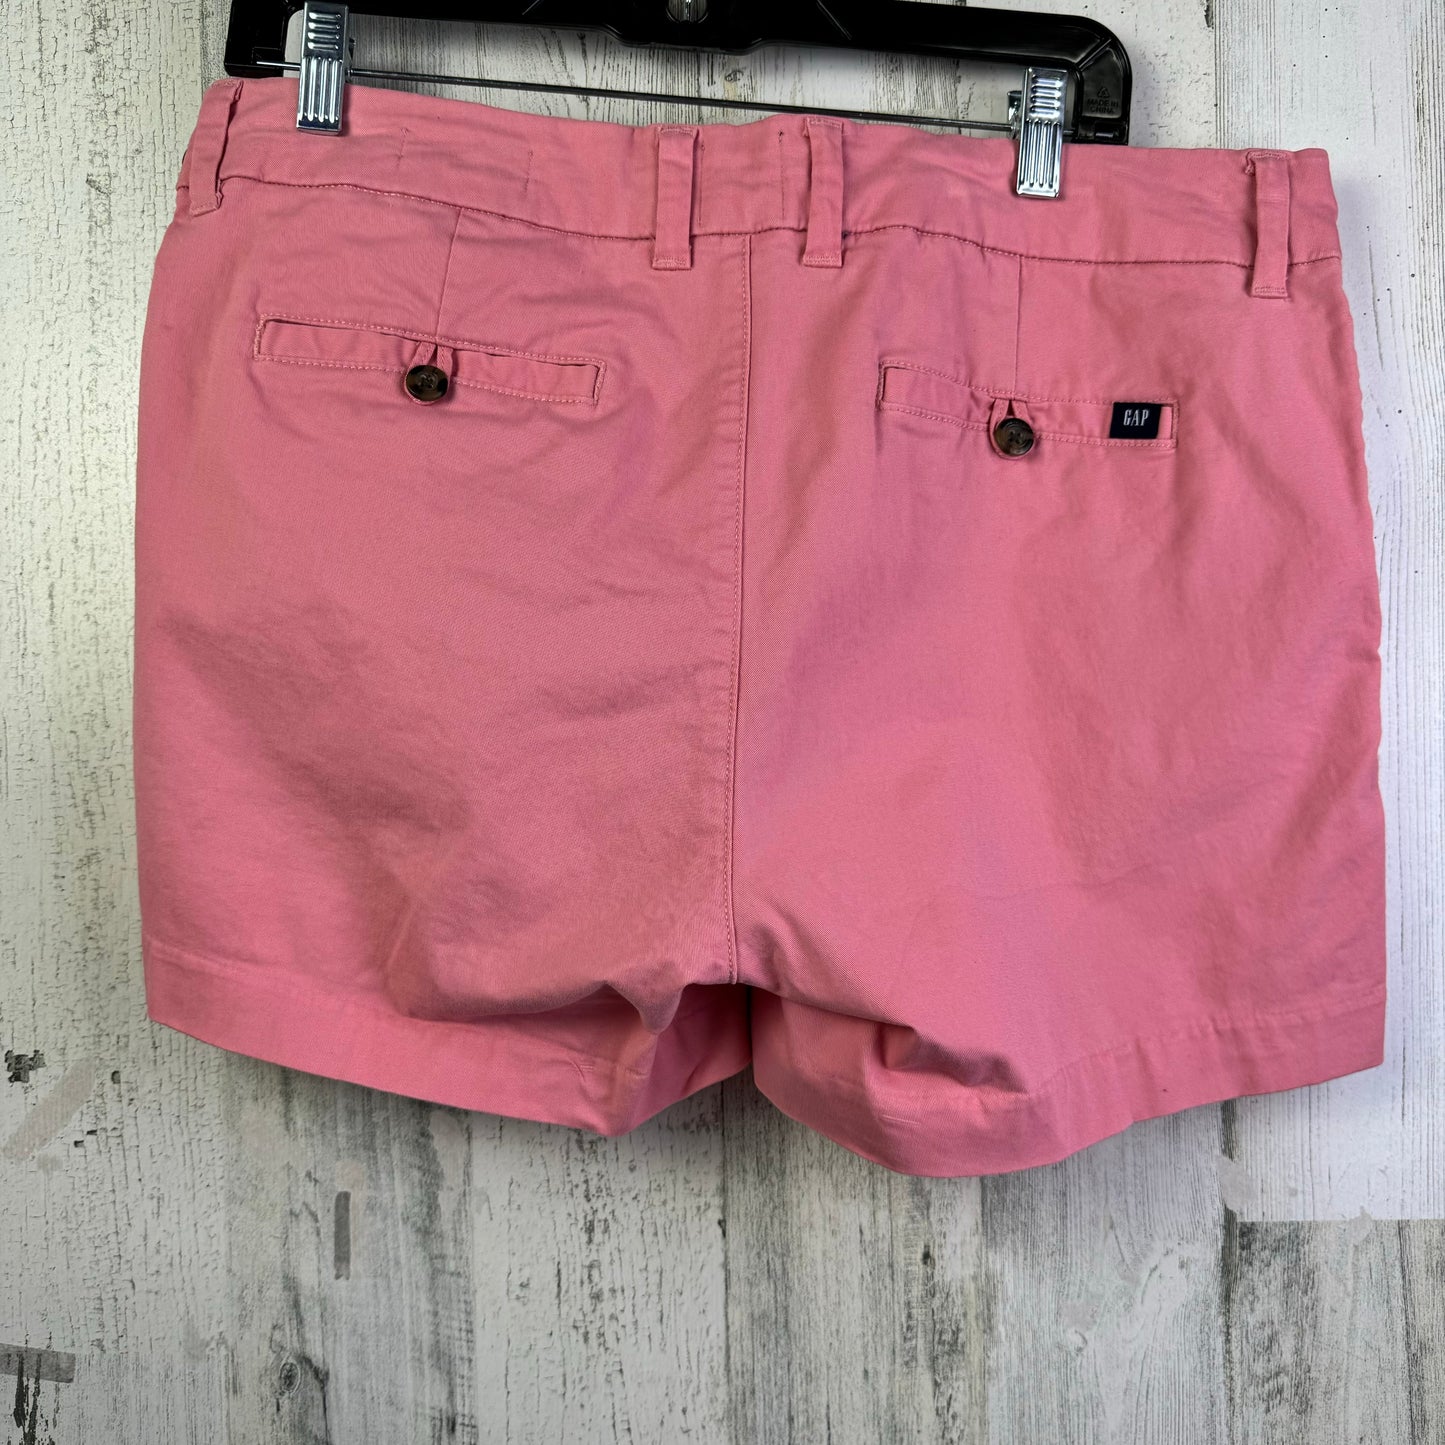 Pink Shorts Gap, Size 12